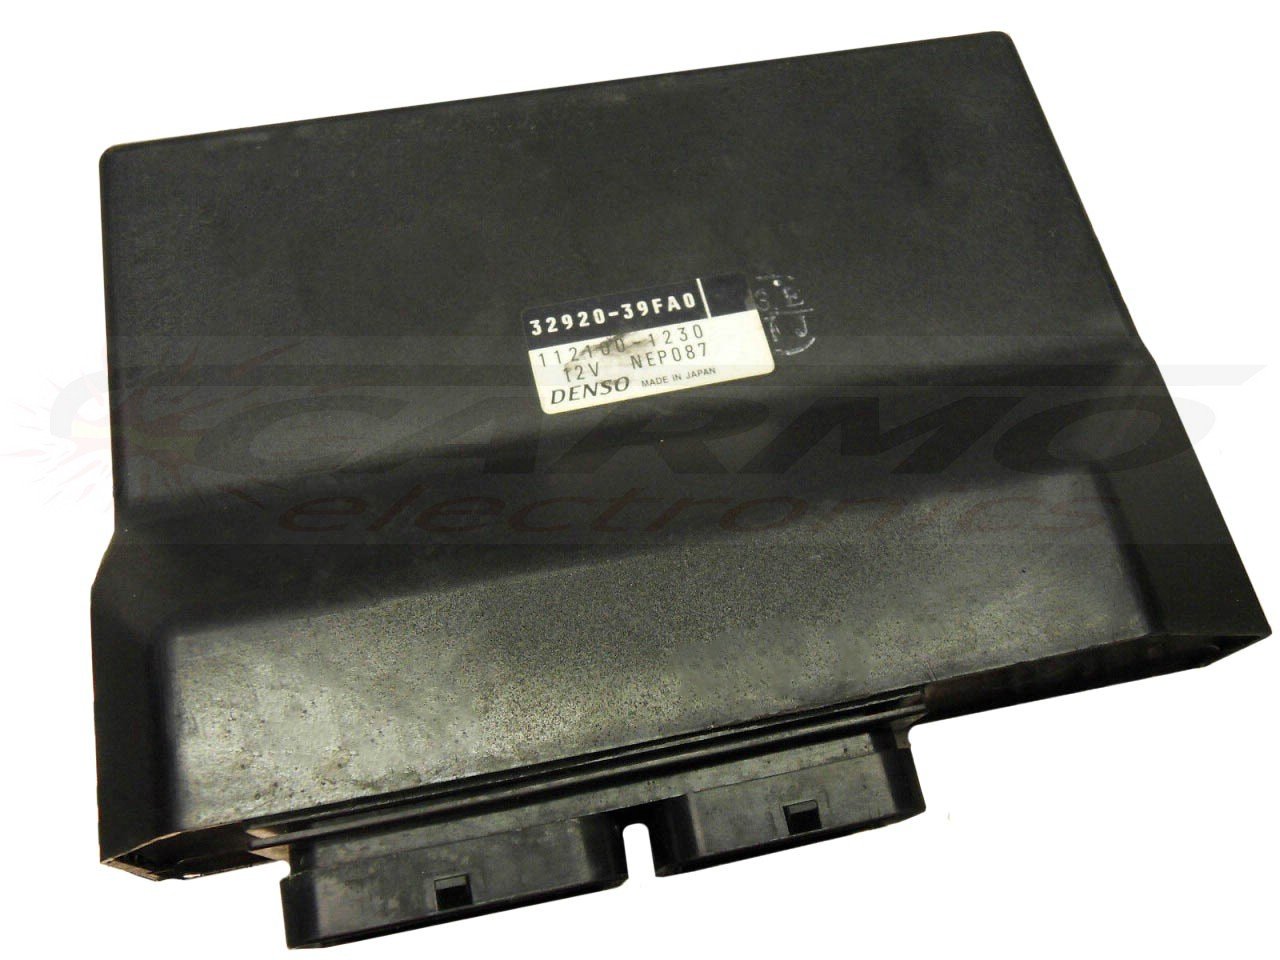 GSXR750 ECU ECM CDI black box computer brain (32920-35F00, 112100-0530)